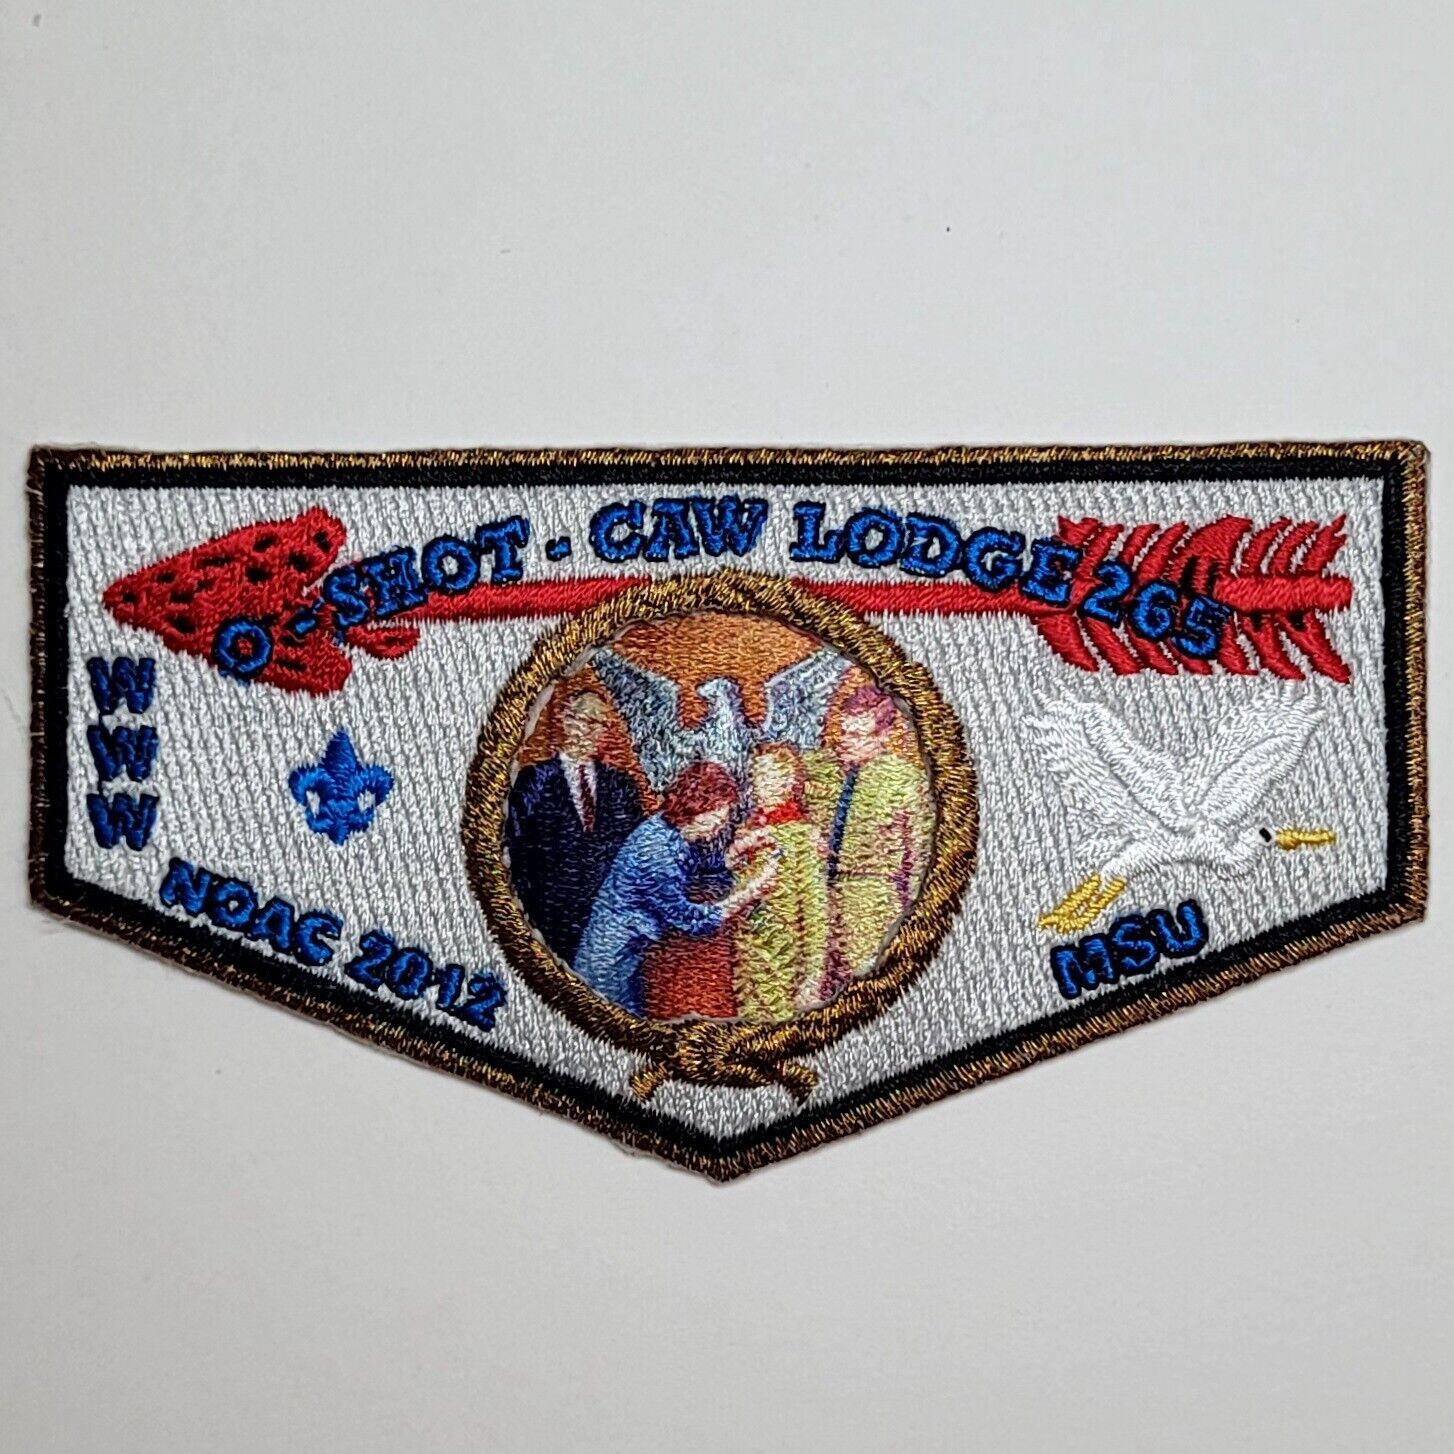 2012 NOAC OA O Shot Caw Lodge 265 South Florida Council - Scouts BSA SF019.